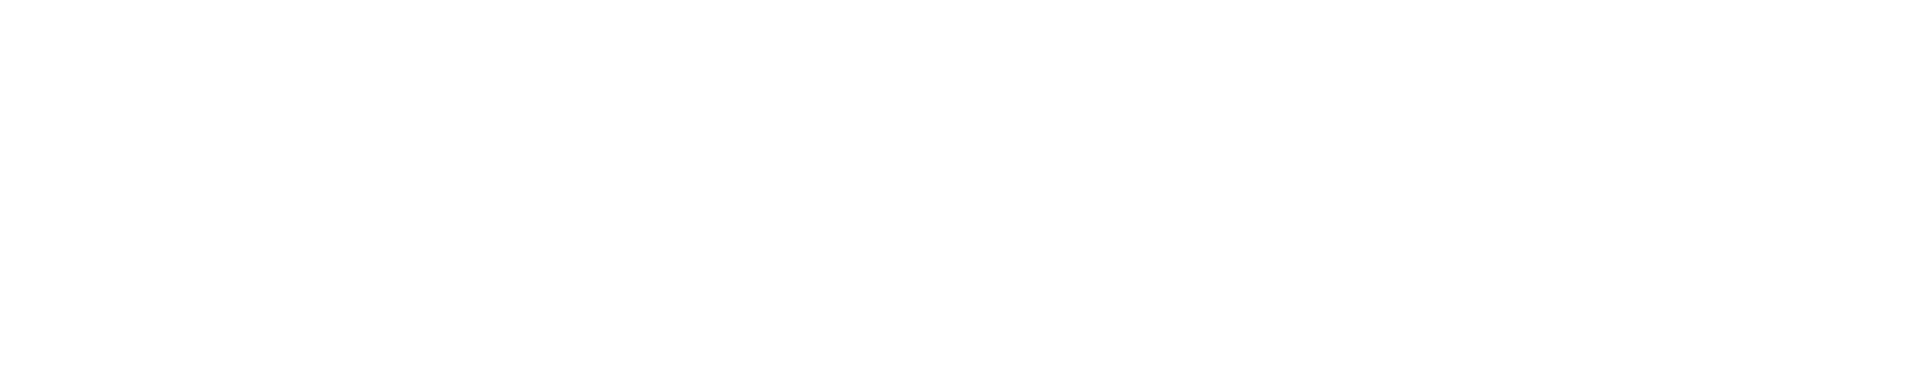 40 Years -  CUNY School of Law